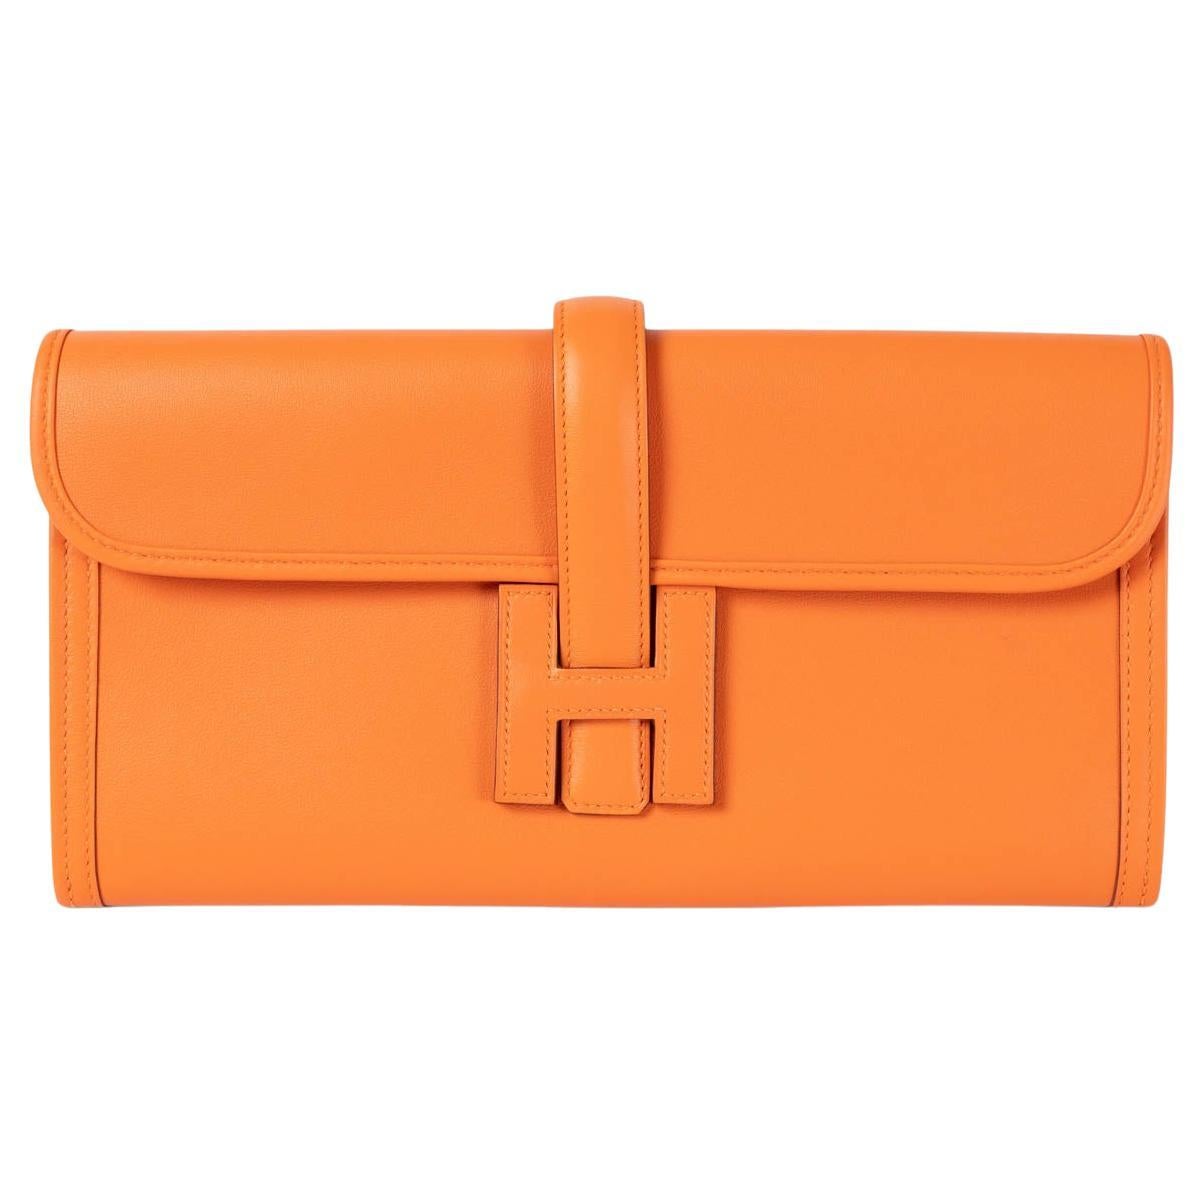 HERMES orange Swift leather JIGE 29 Clutch Bag For Sale